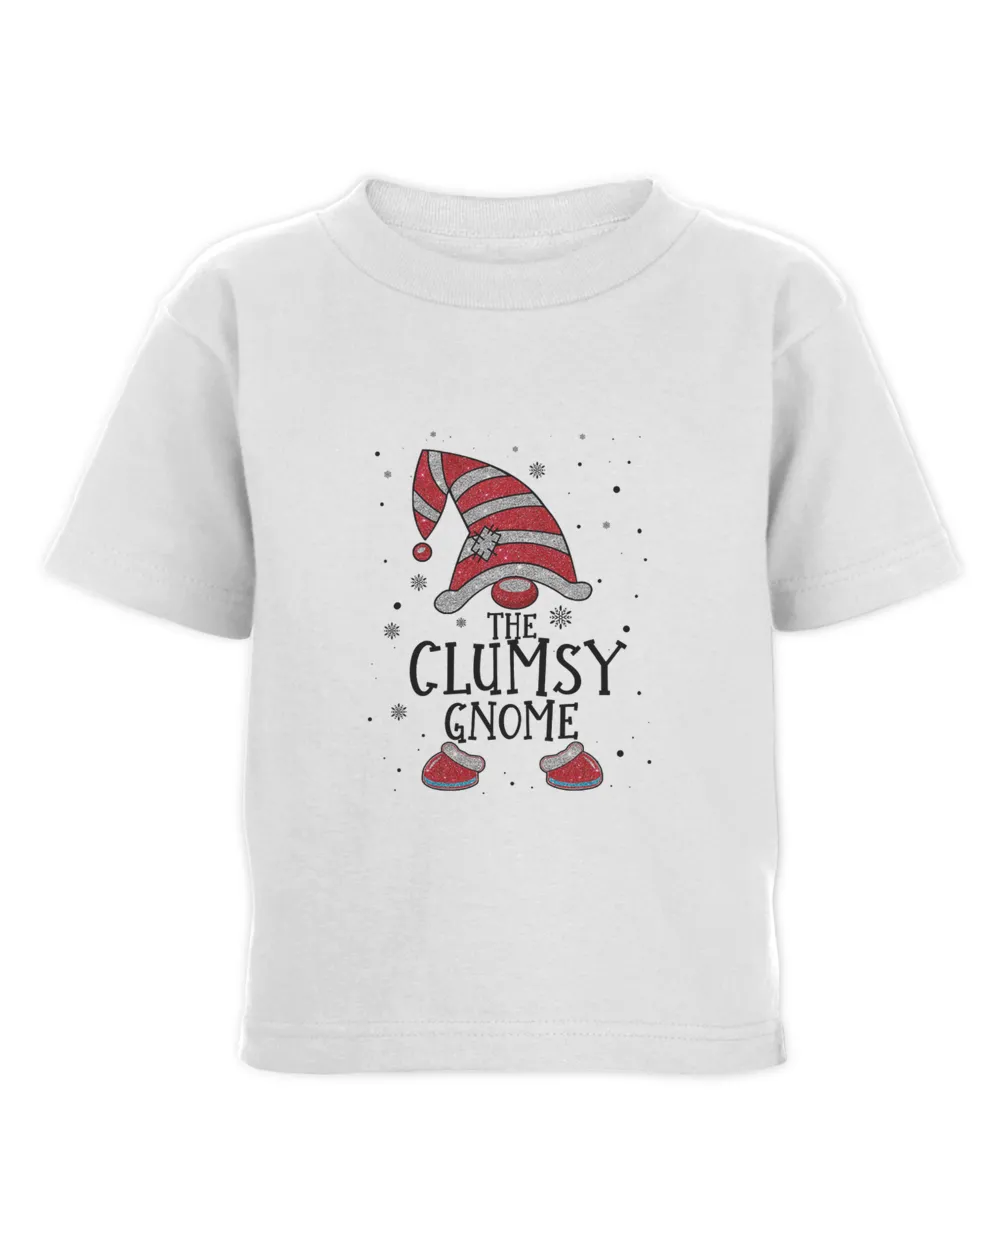 CLUMSY Gnome Buffalo Plaid Matching Christmas 2021 Pajama T-Shirt